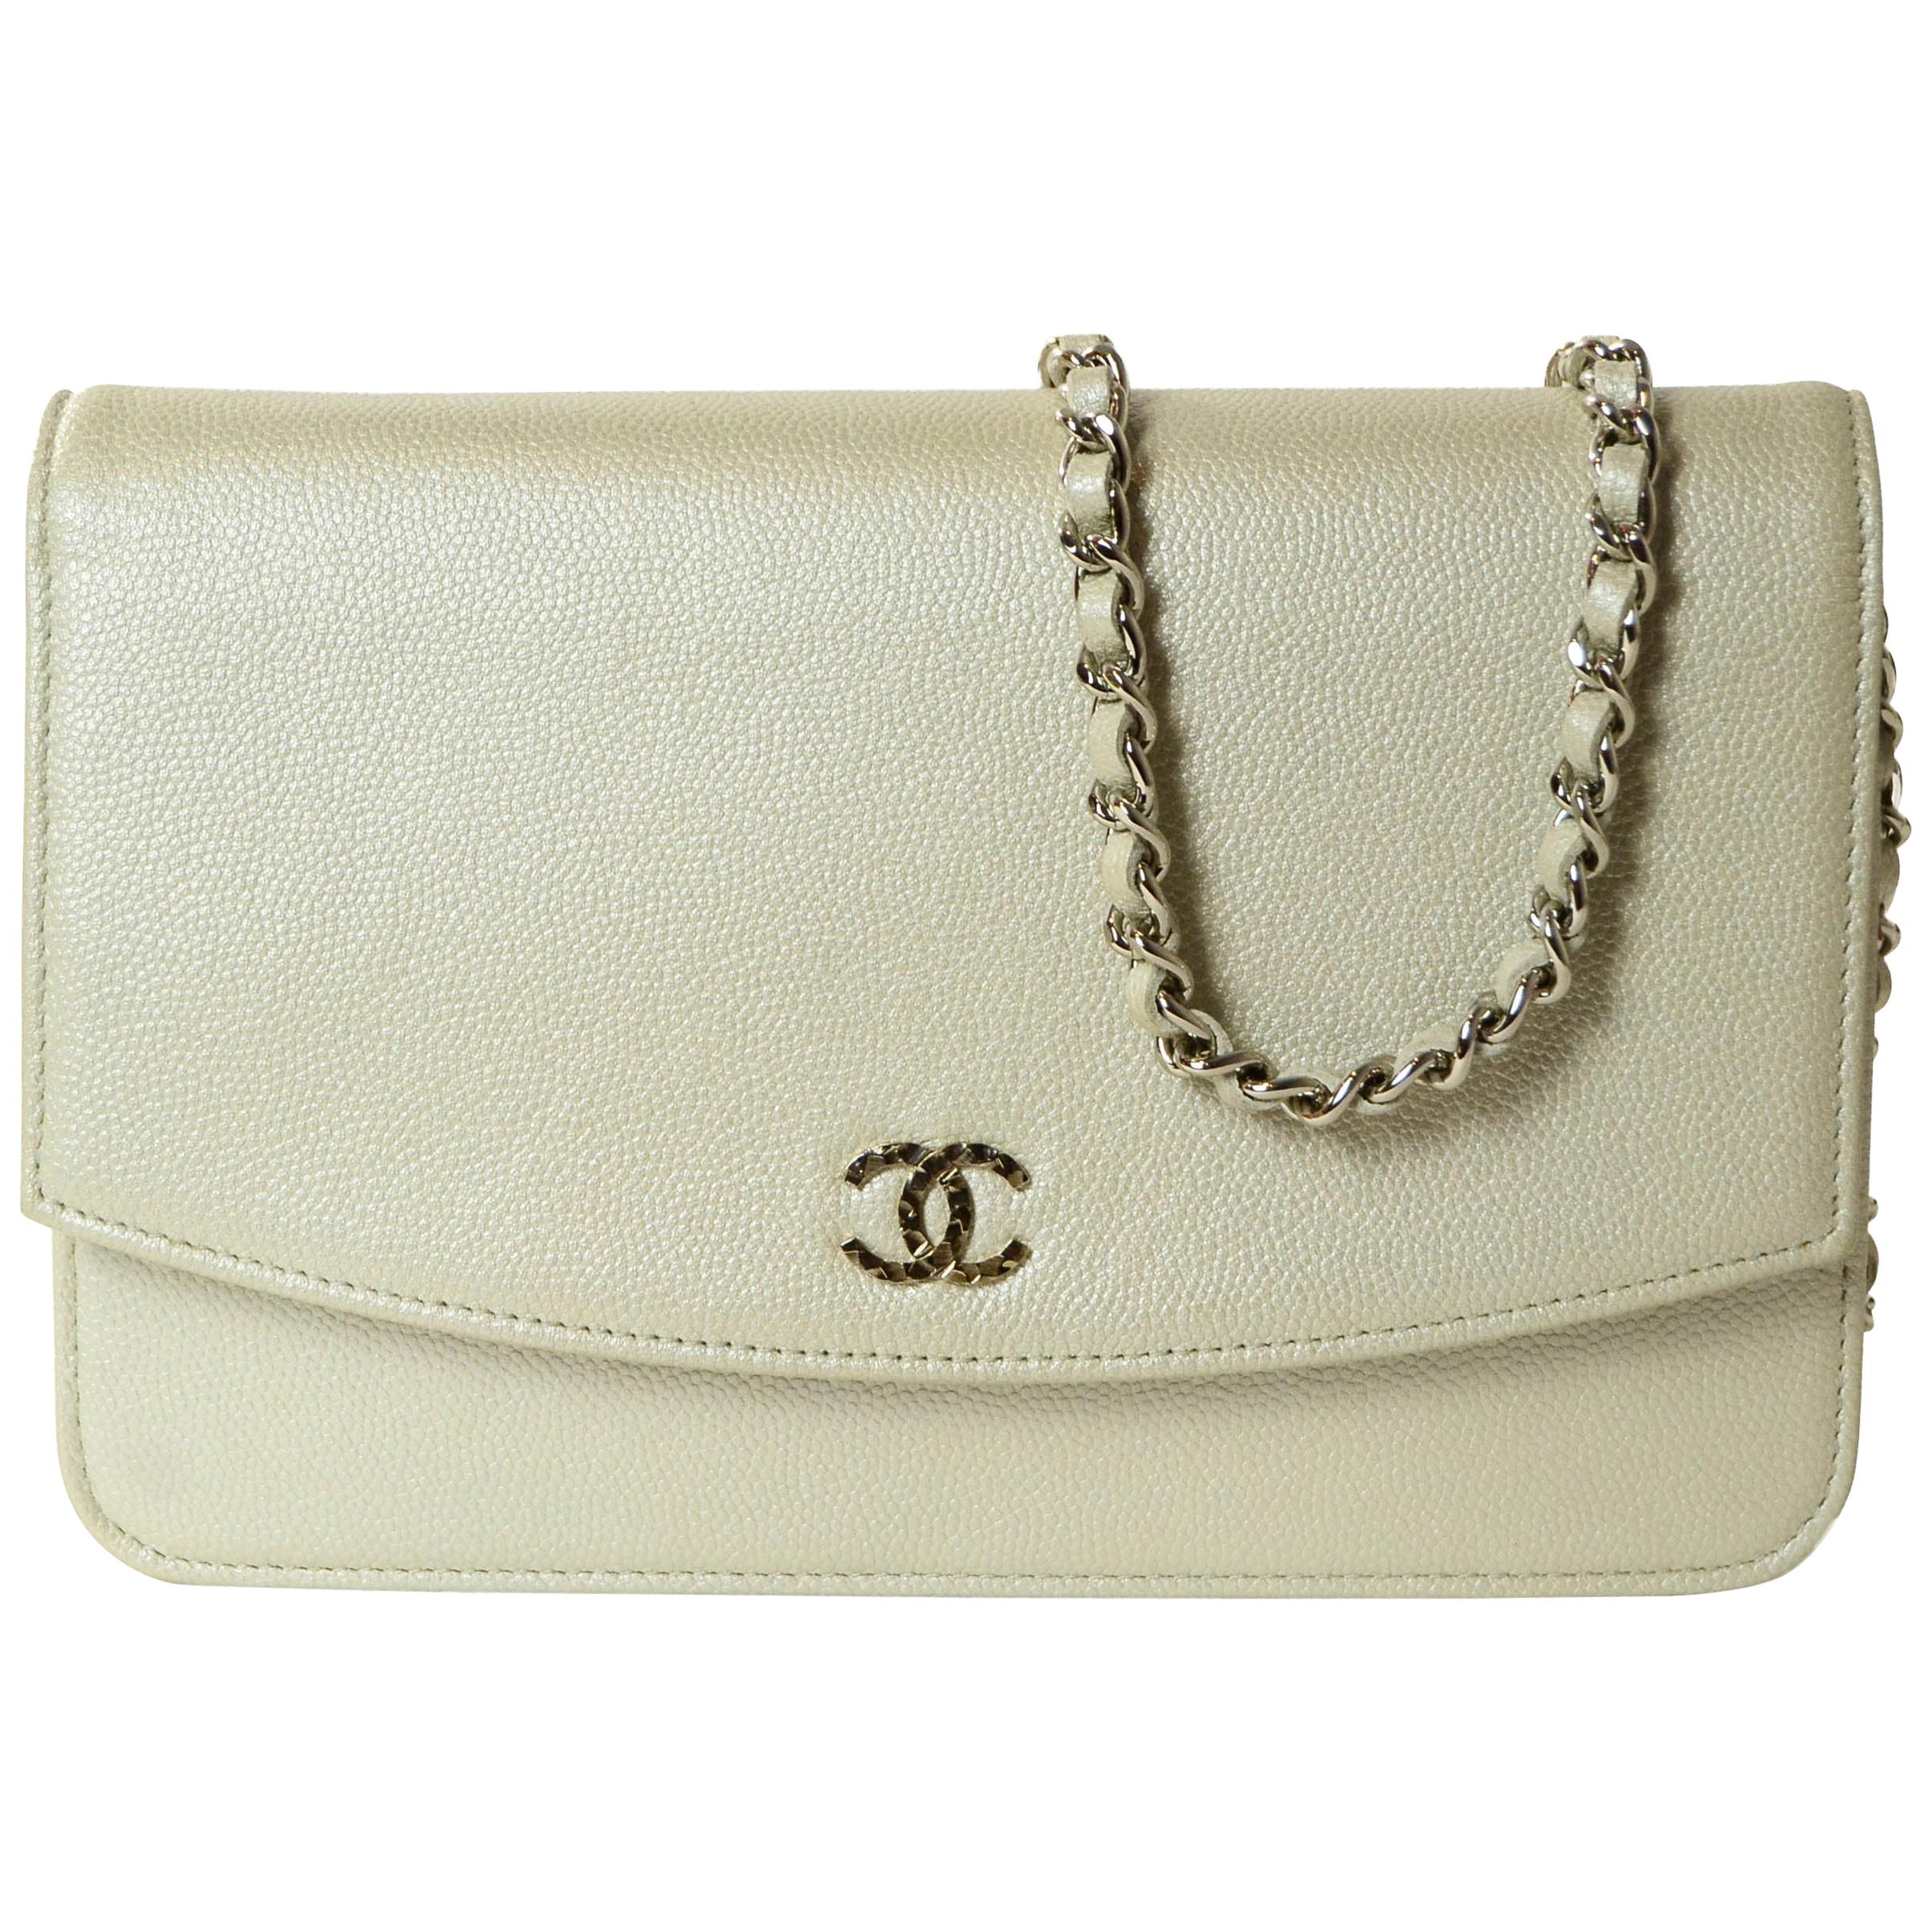 Chanel Silver Caviar Leather Wallet On A Chain WOC Crossbody Bag